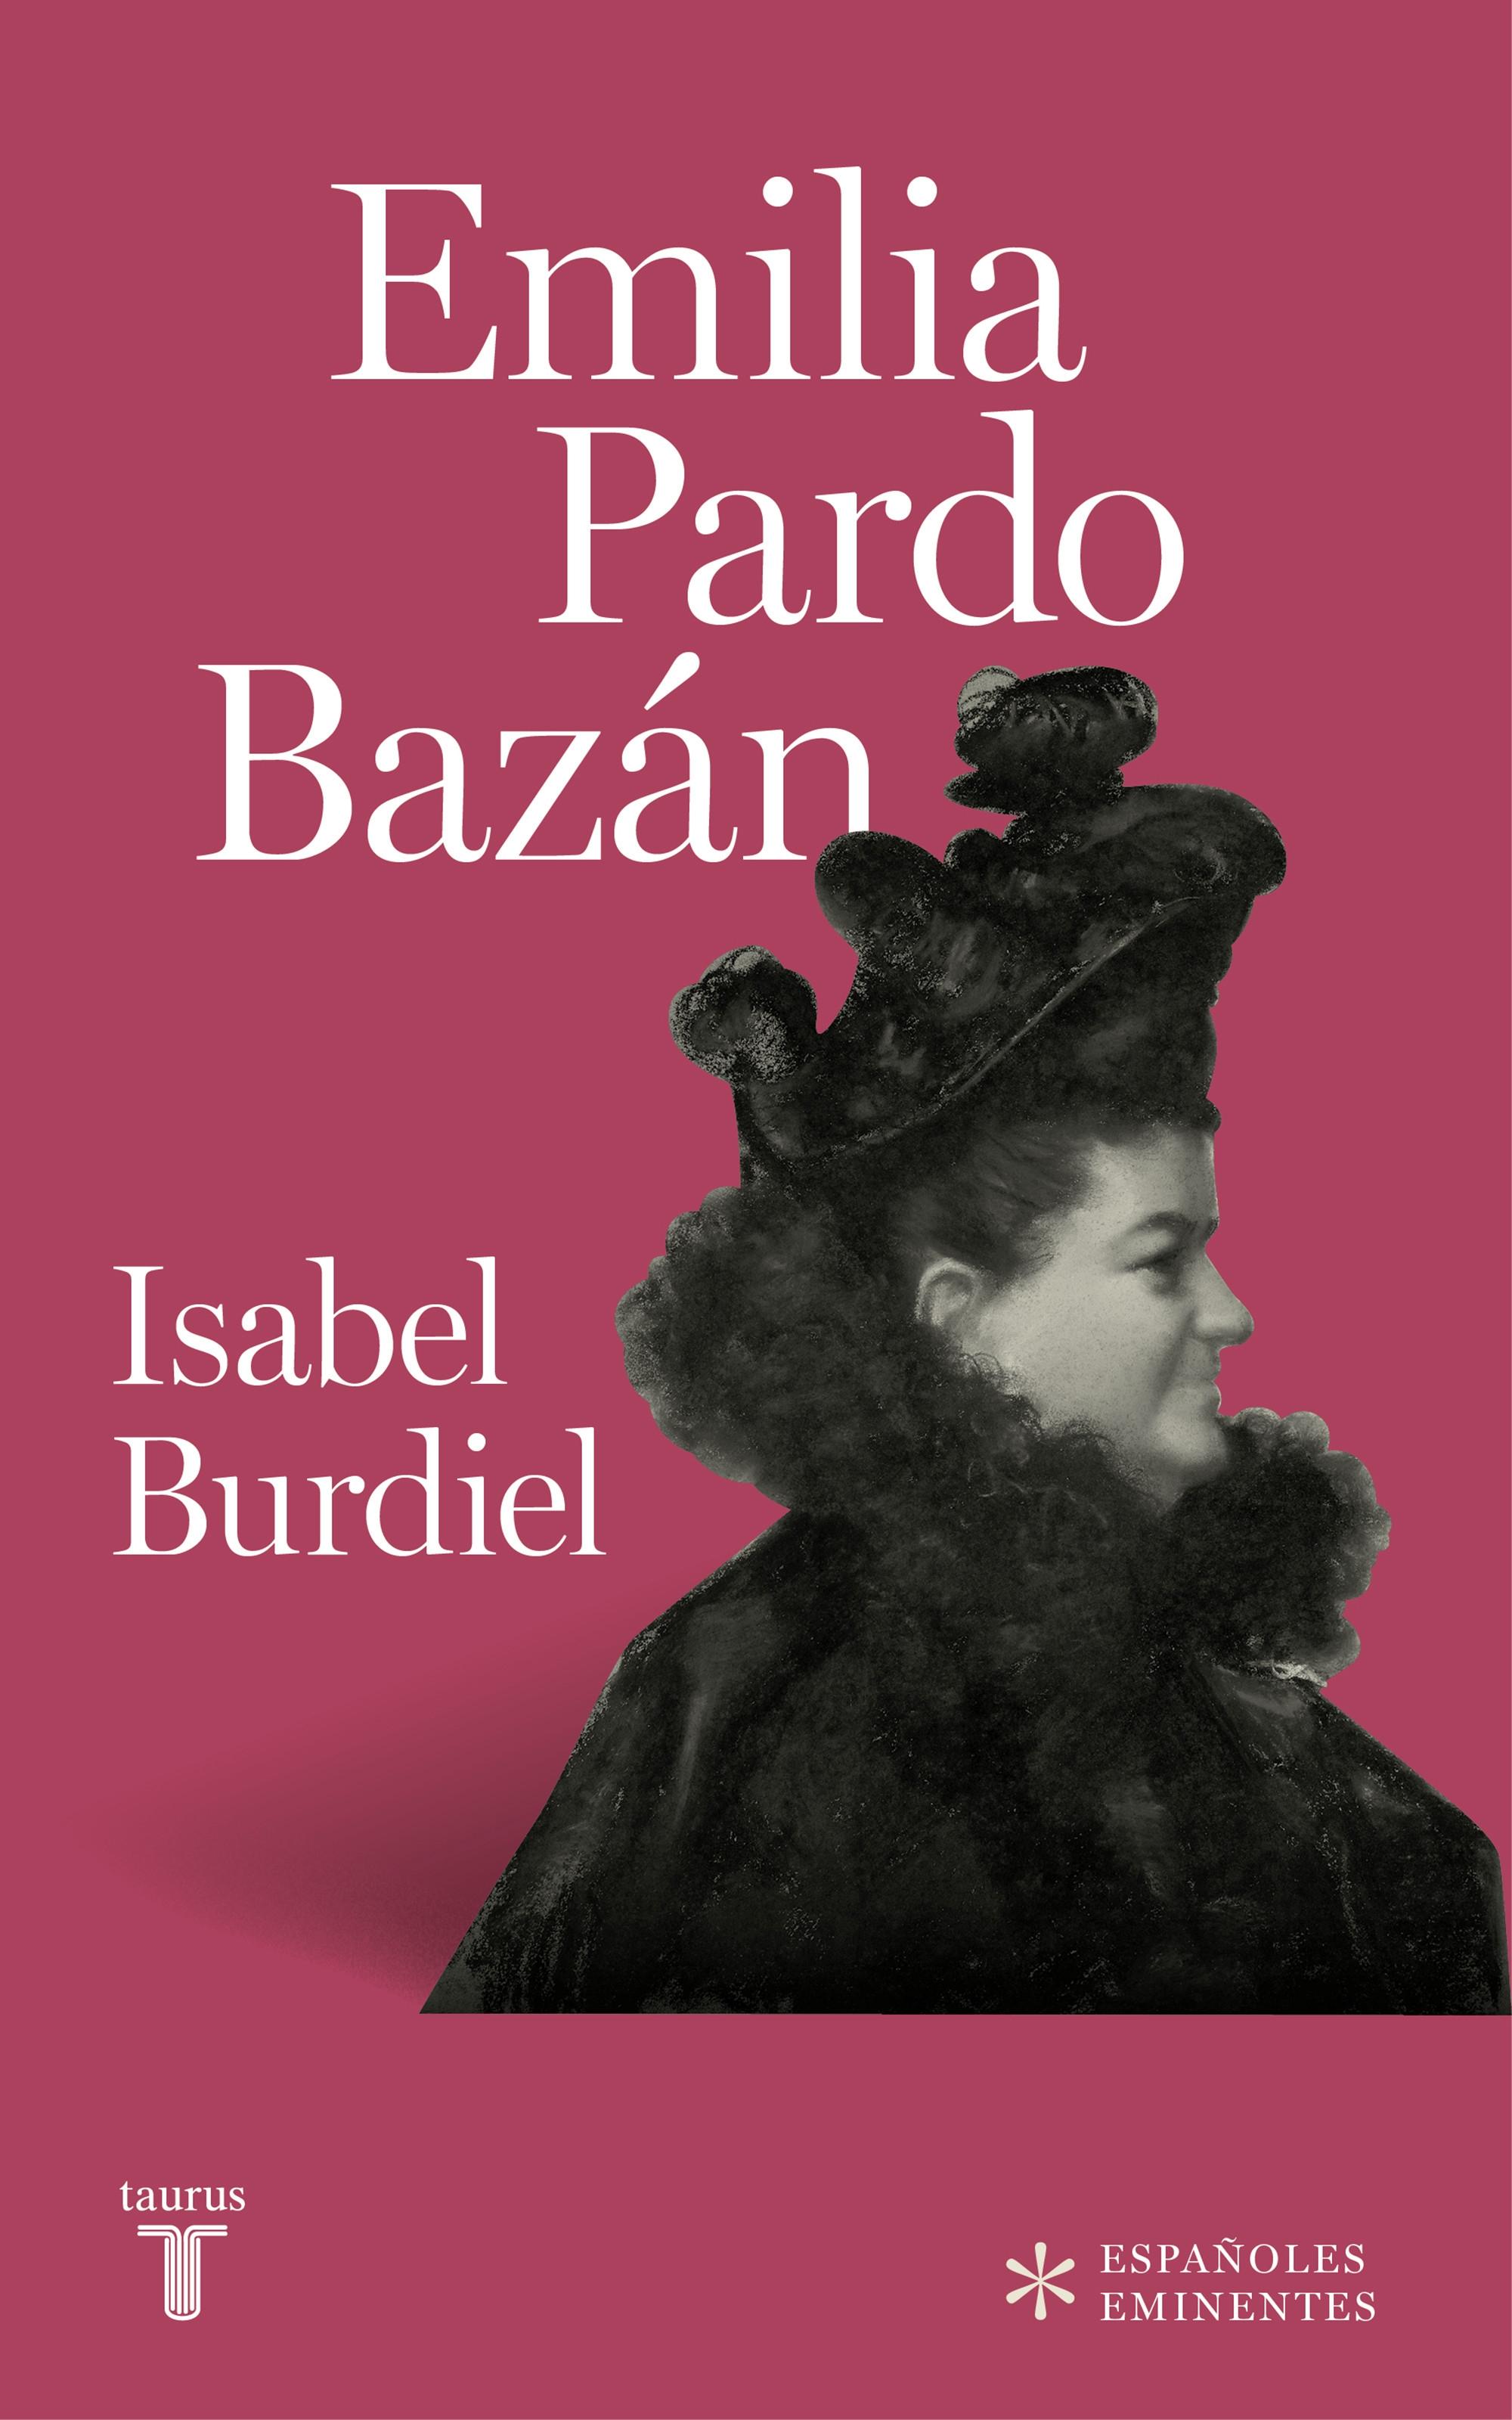 Emilia Pardo Bazán. 